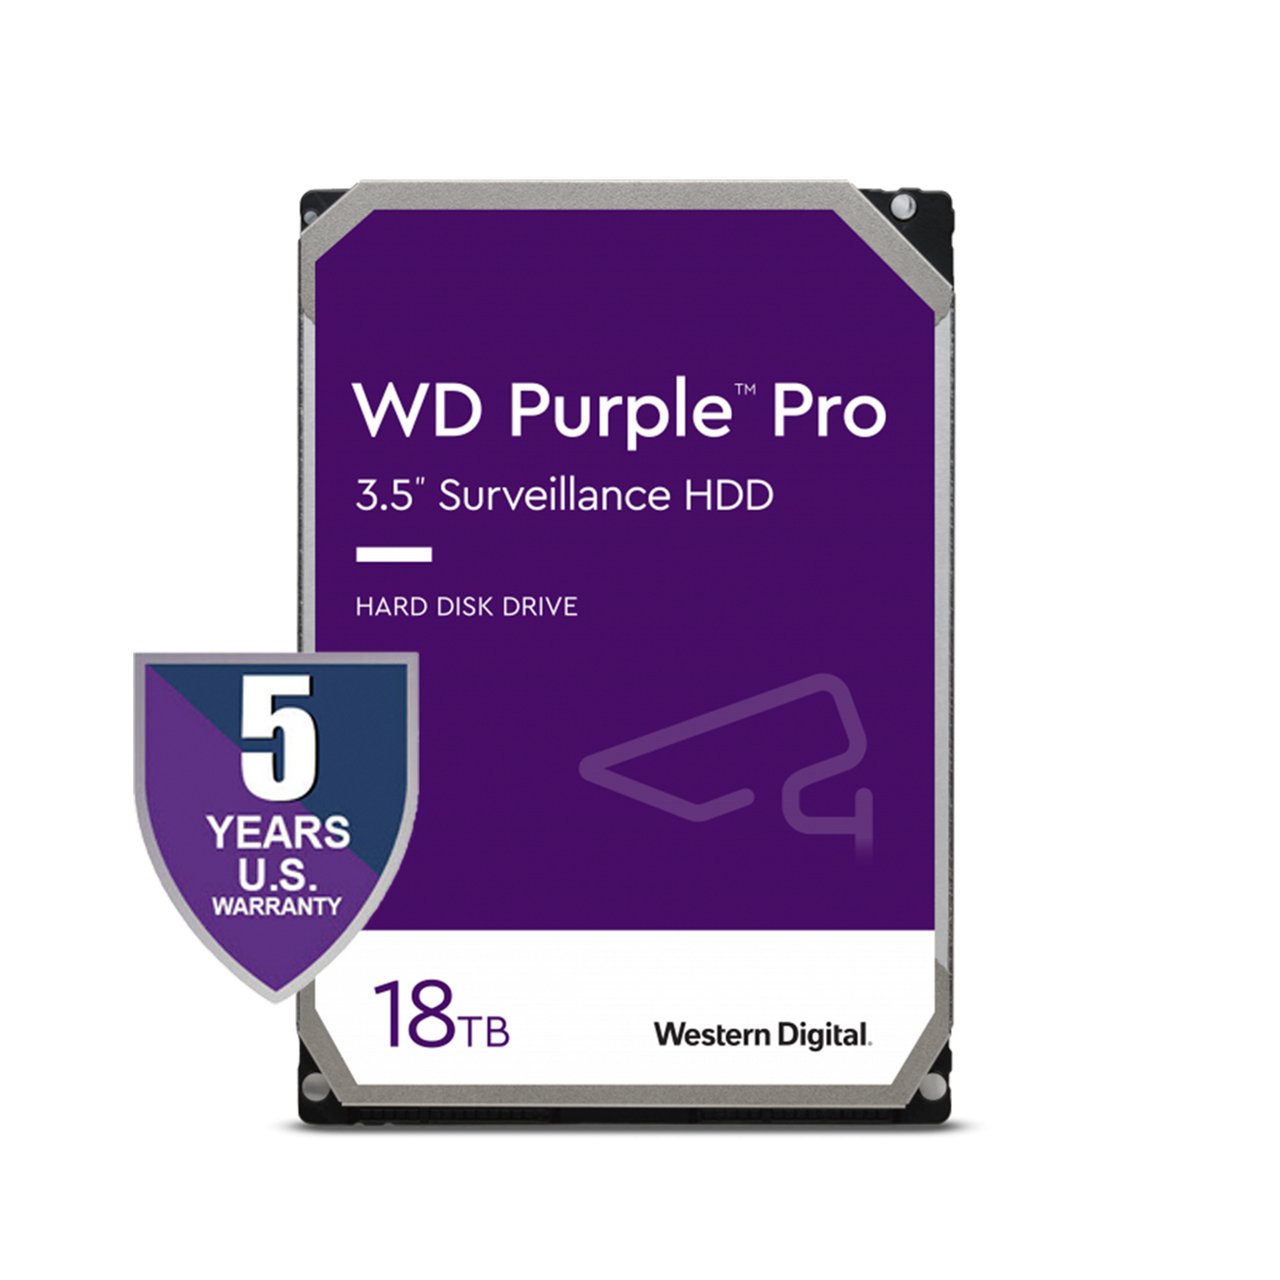 WD Purple Pro Surveillance Hard Drive 18TB Main